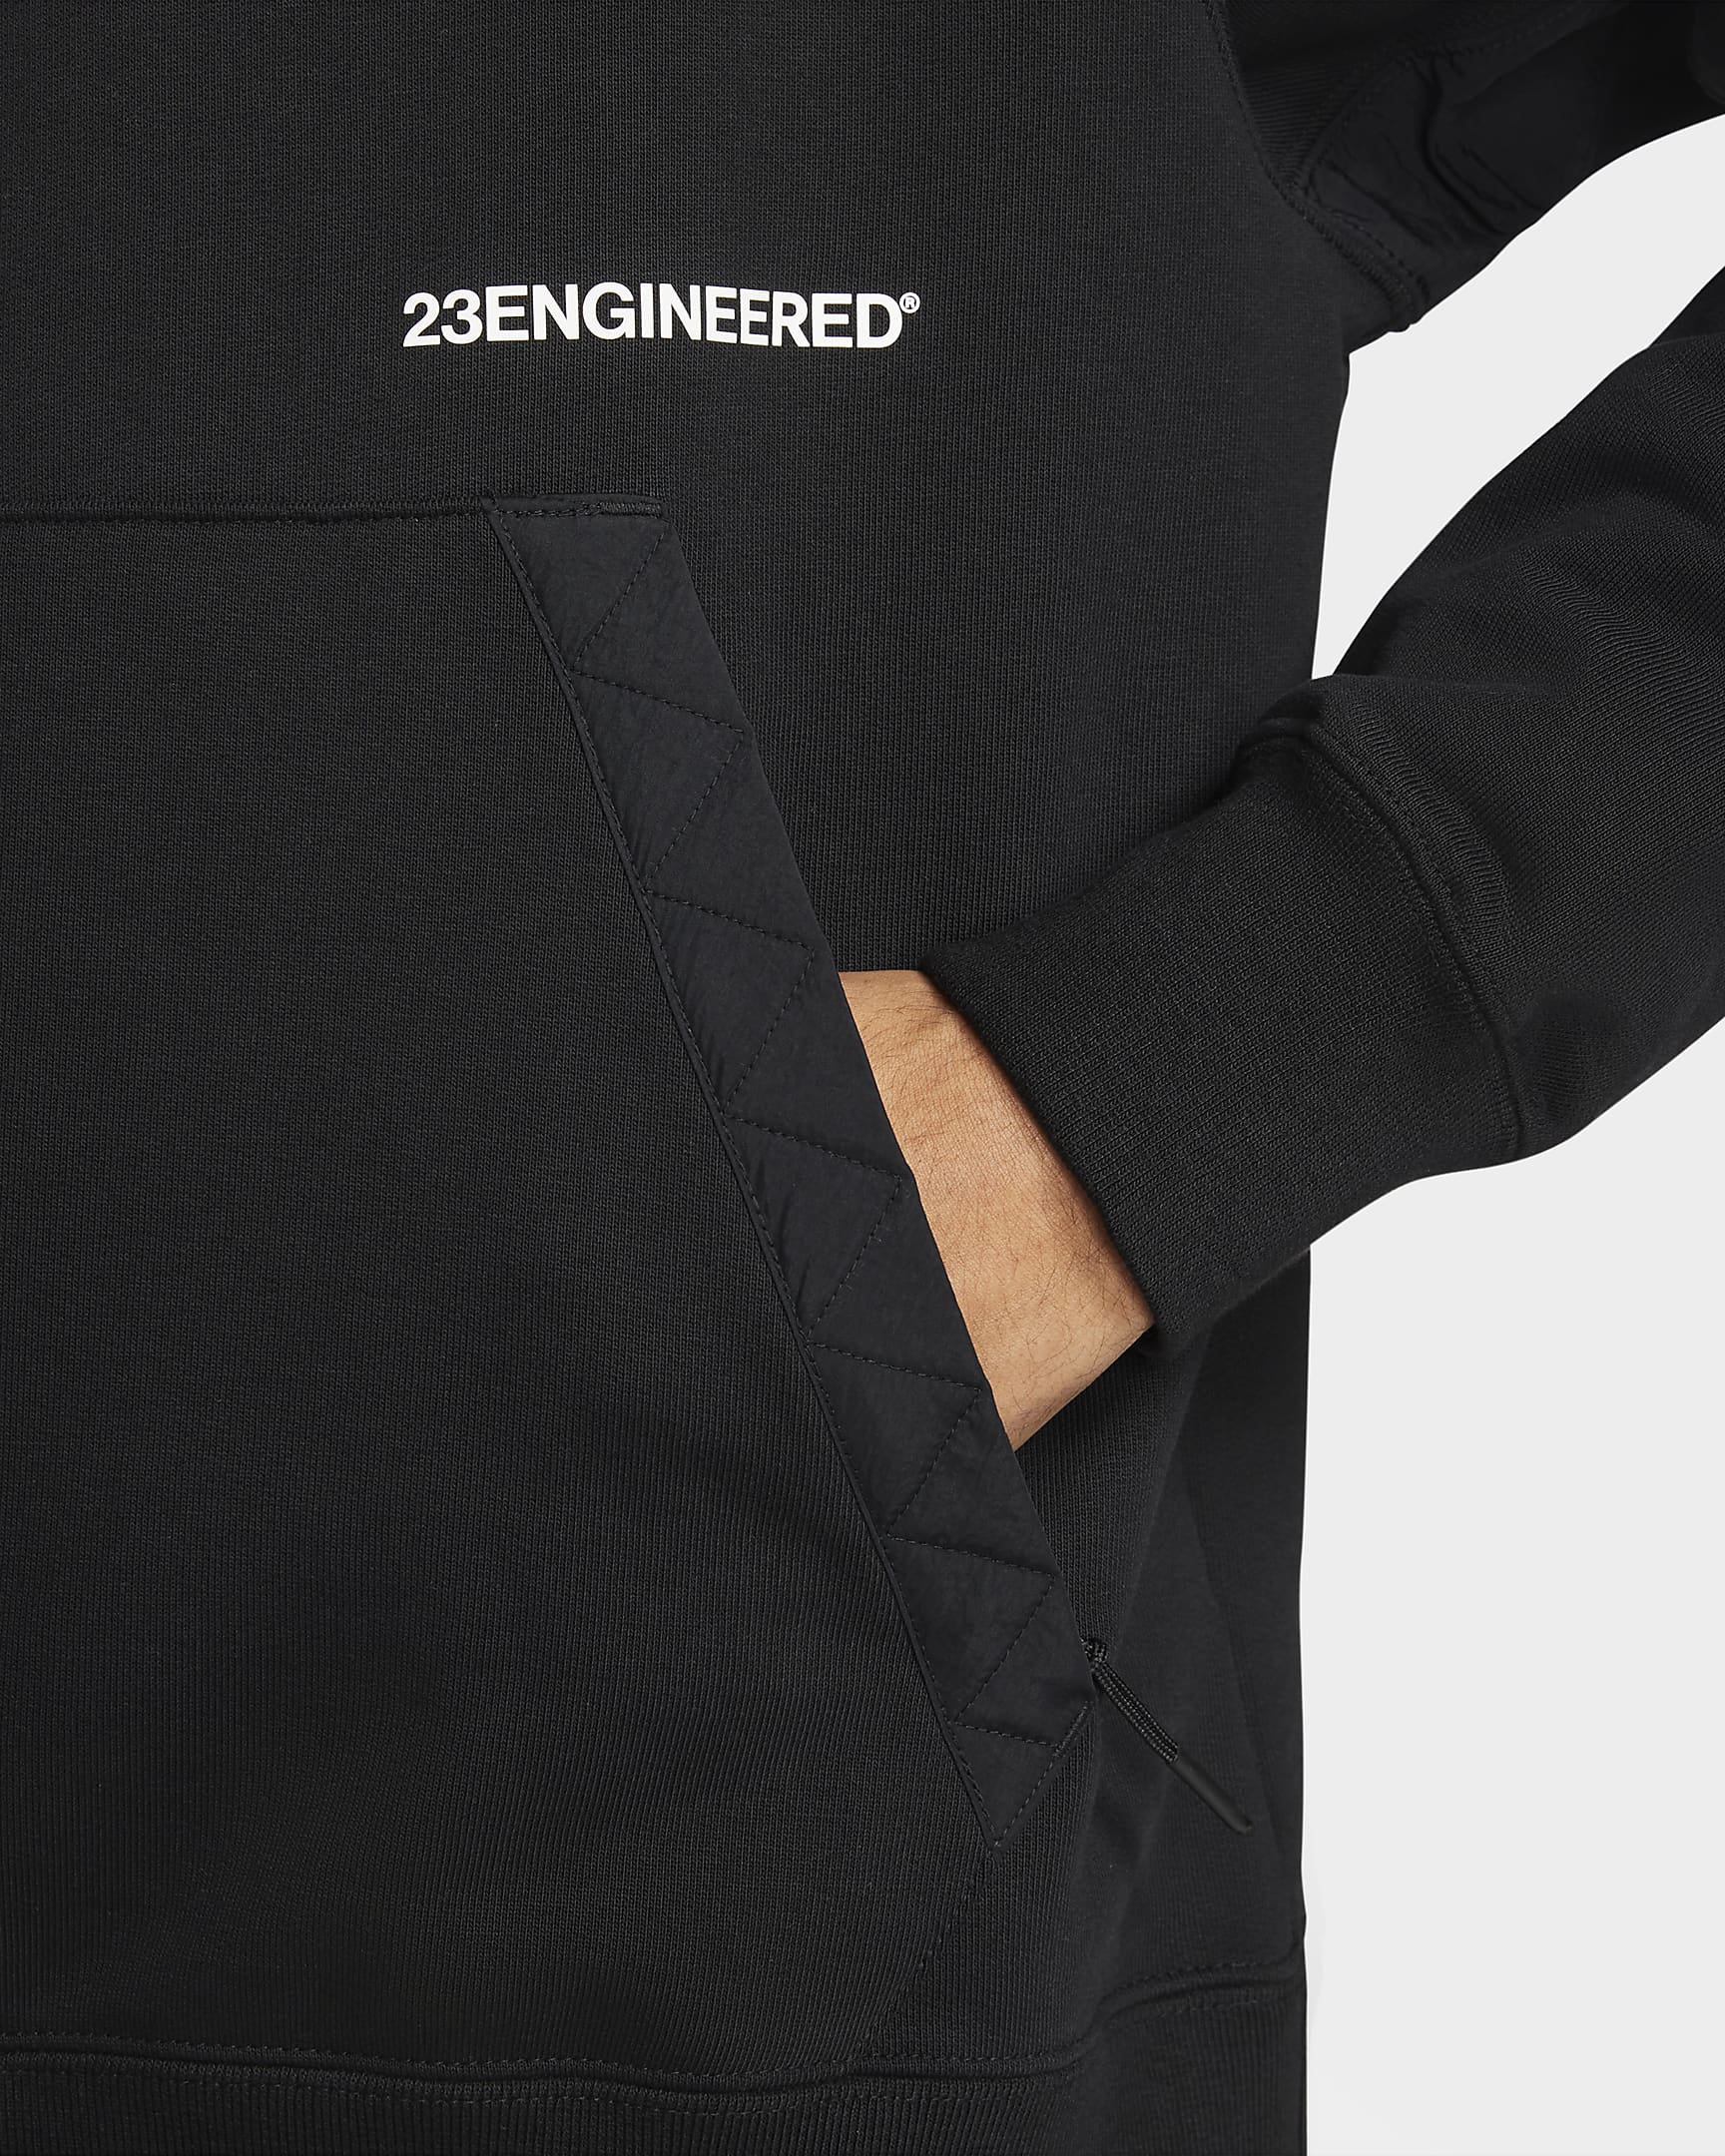 jordan-23-engineered-mens-fleece-pullover-hoodie-QbRhJ5-3.png